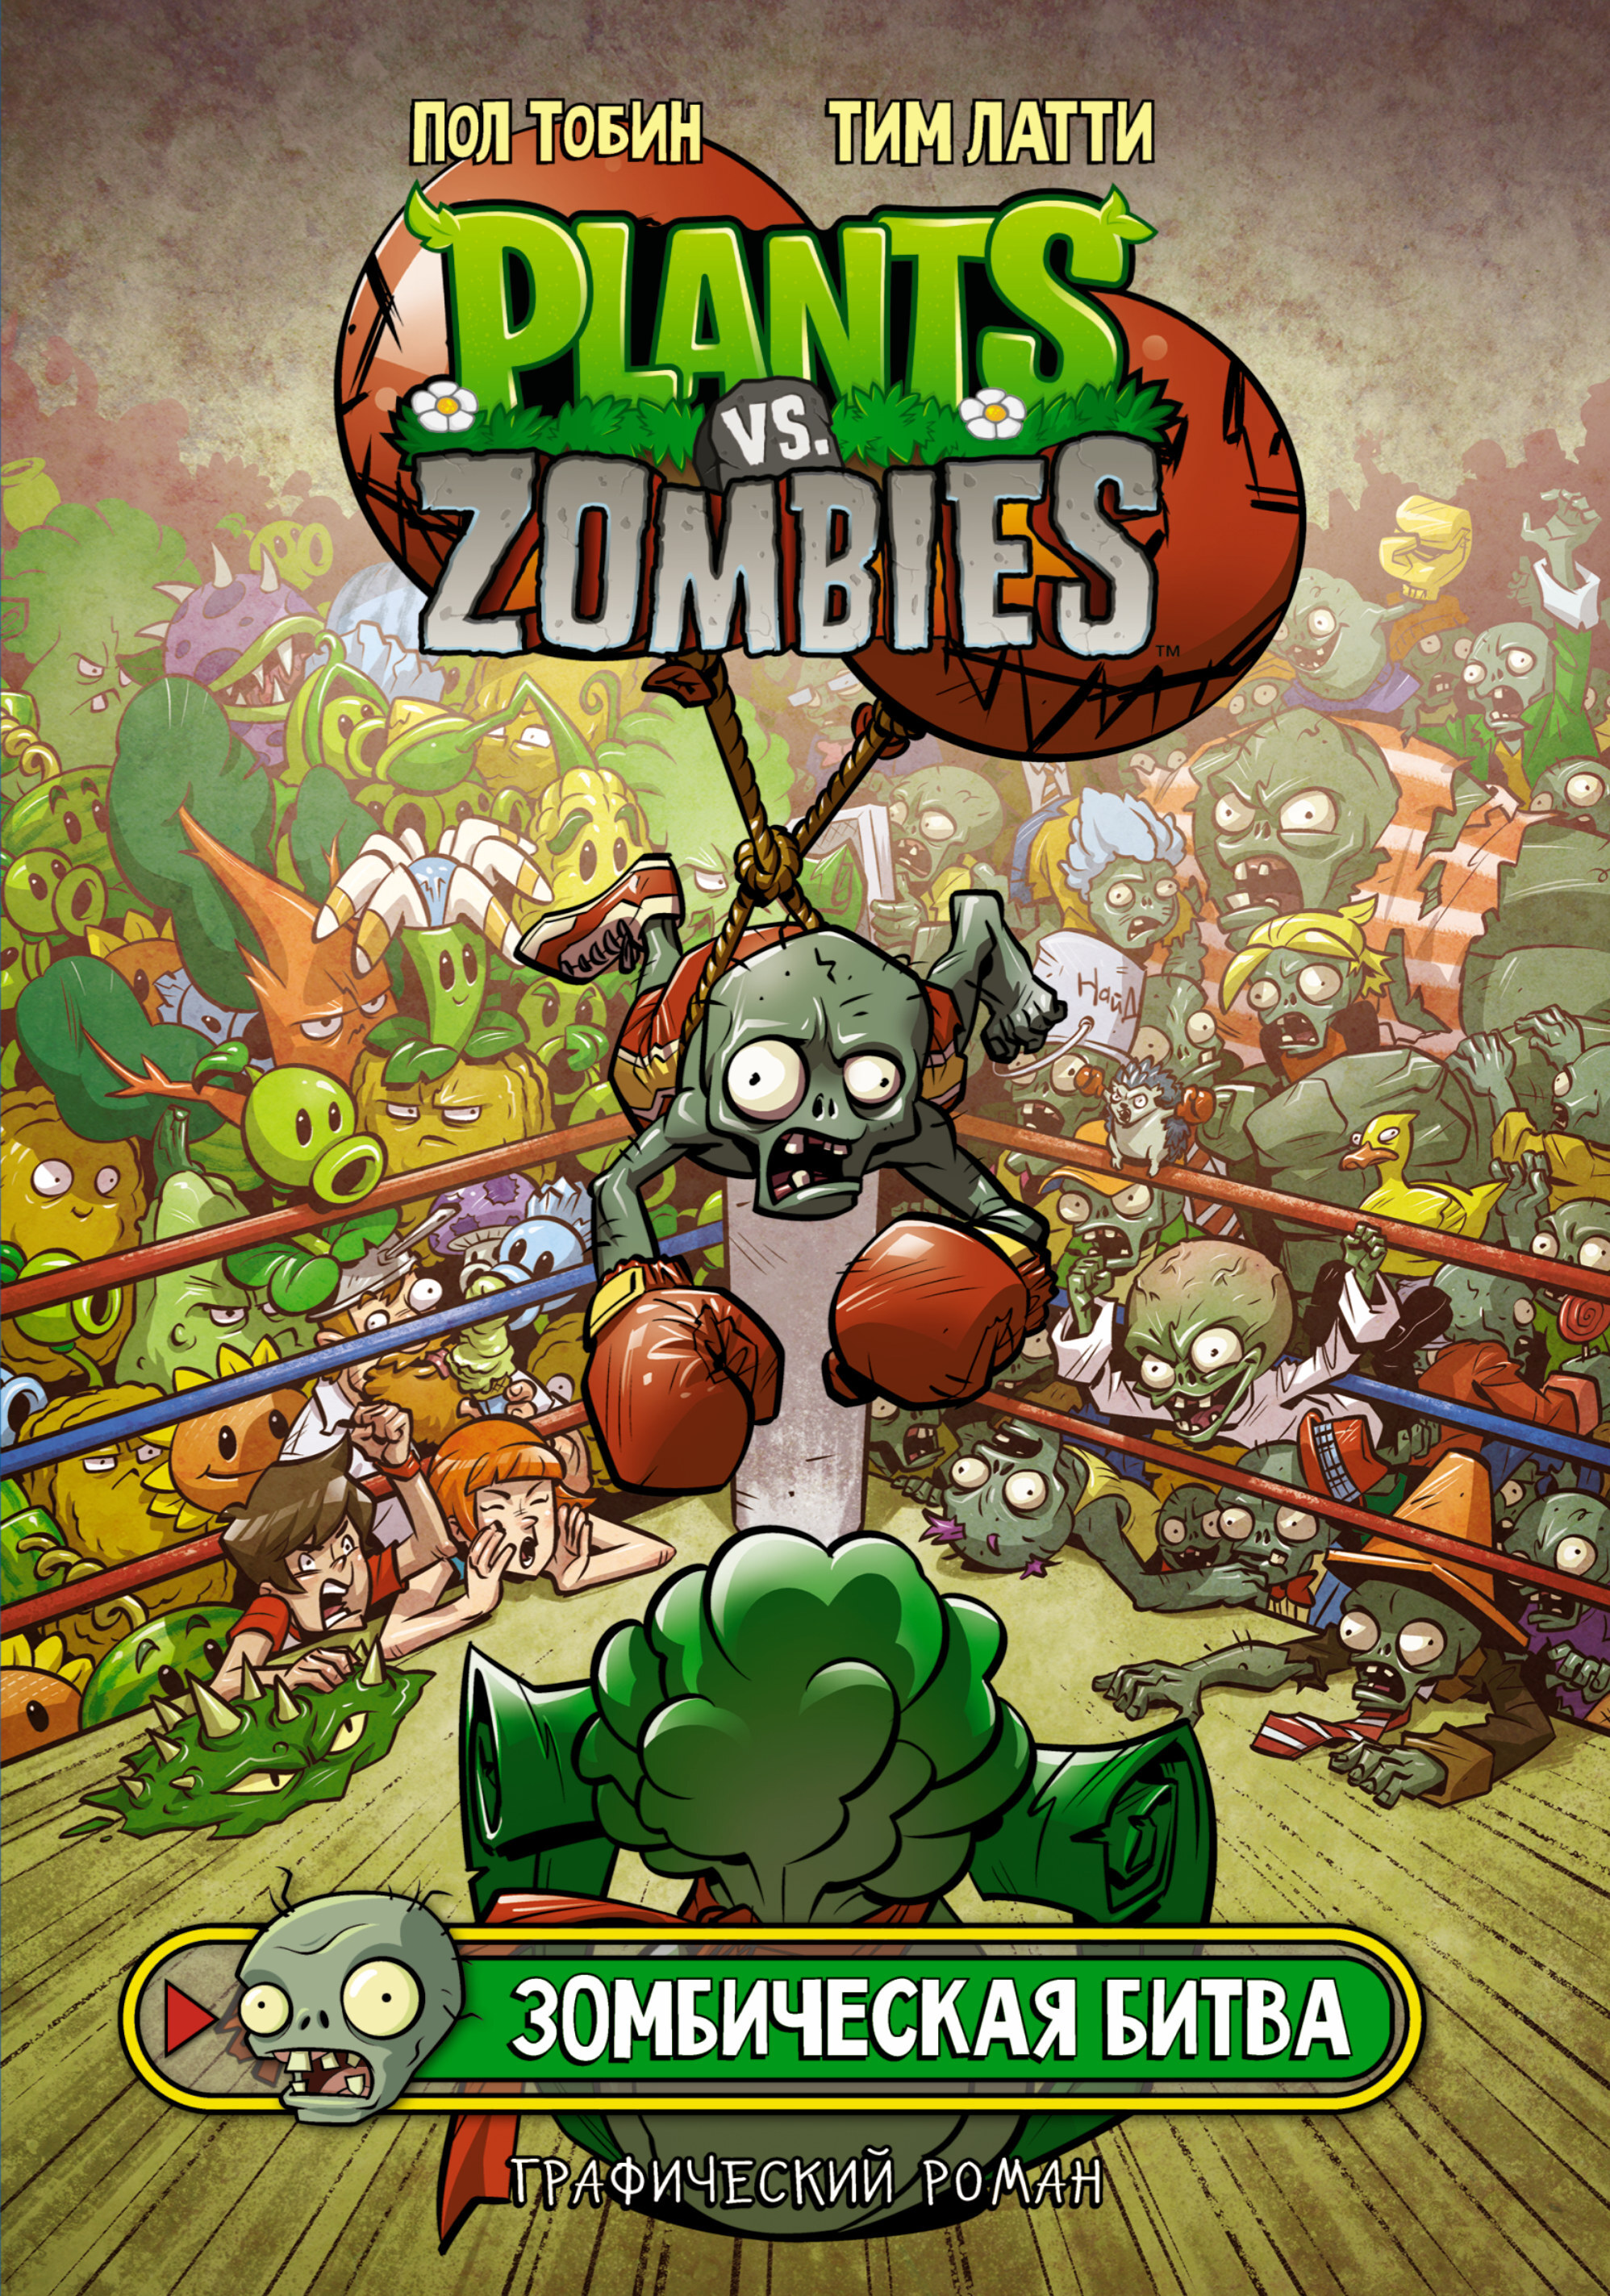 Plants vs zombies on steam фото 60